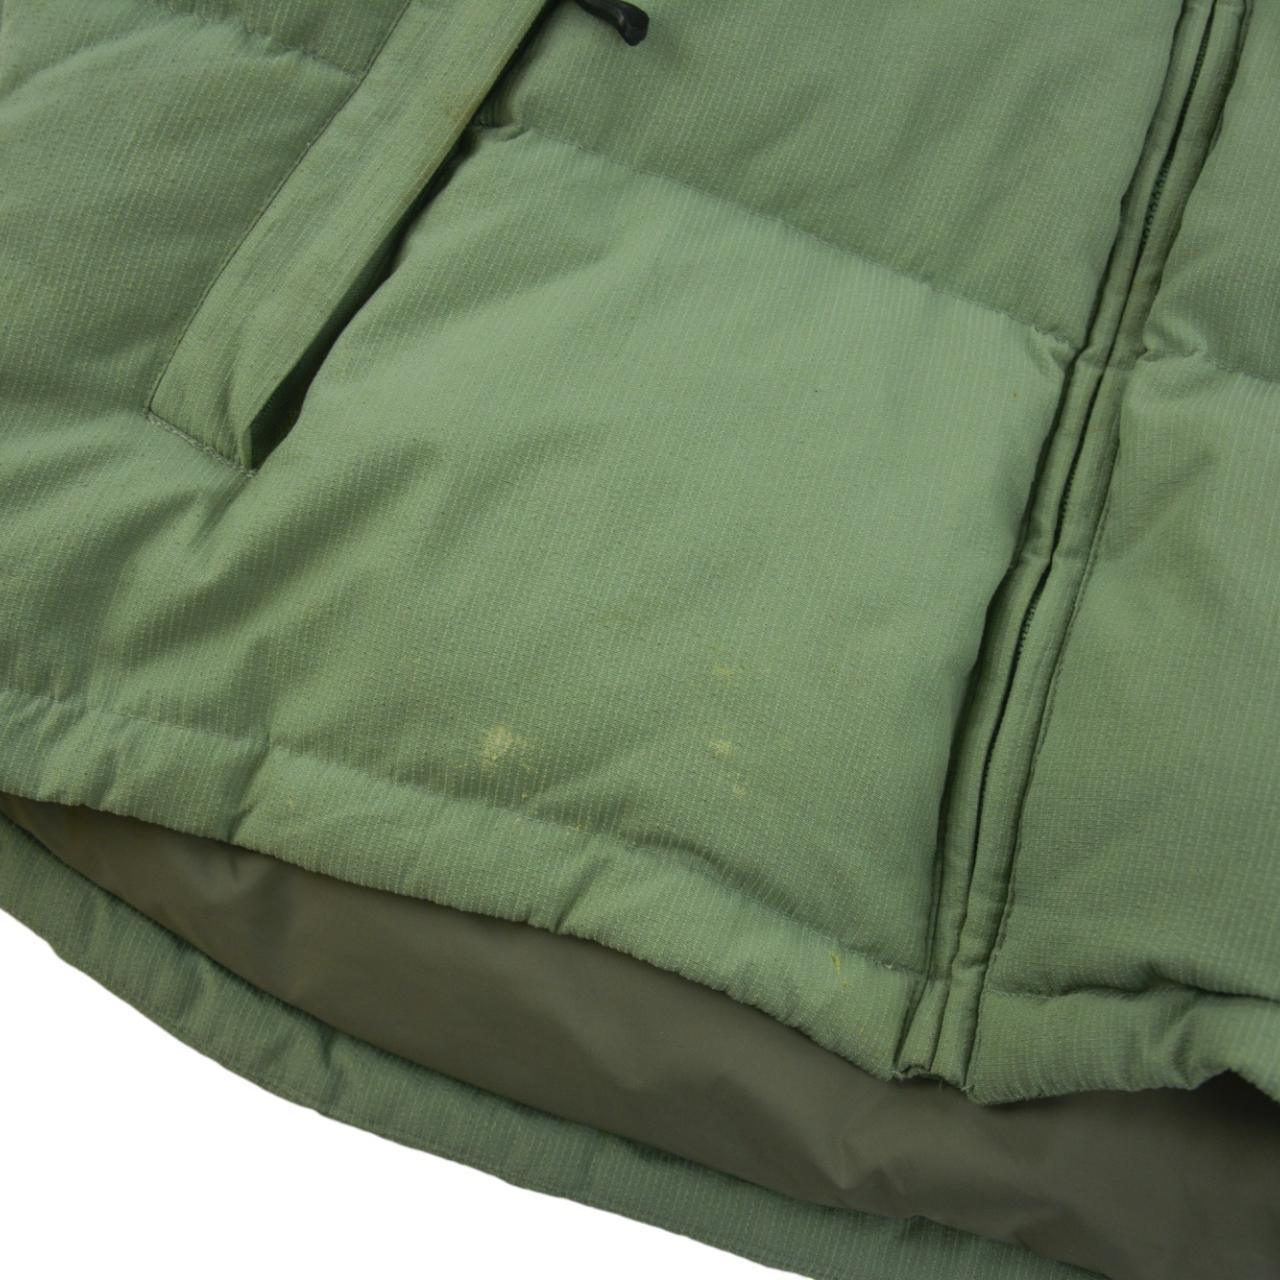 Vintage Fila Puffer Jacket Size XL - Known Source